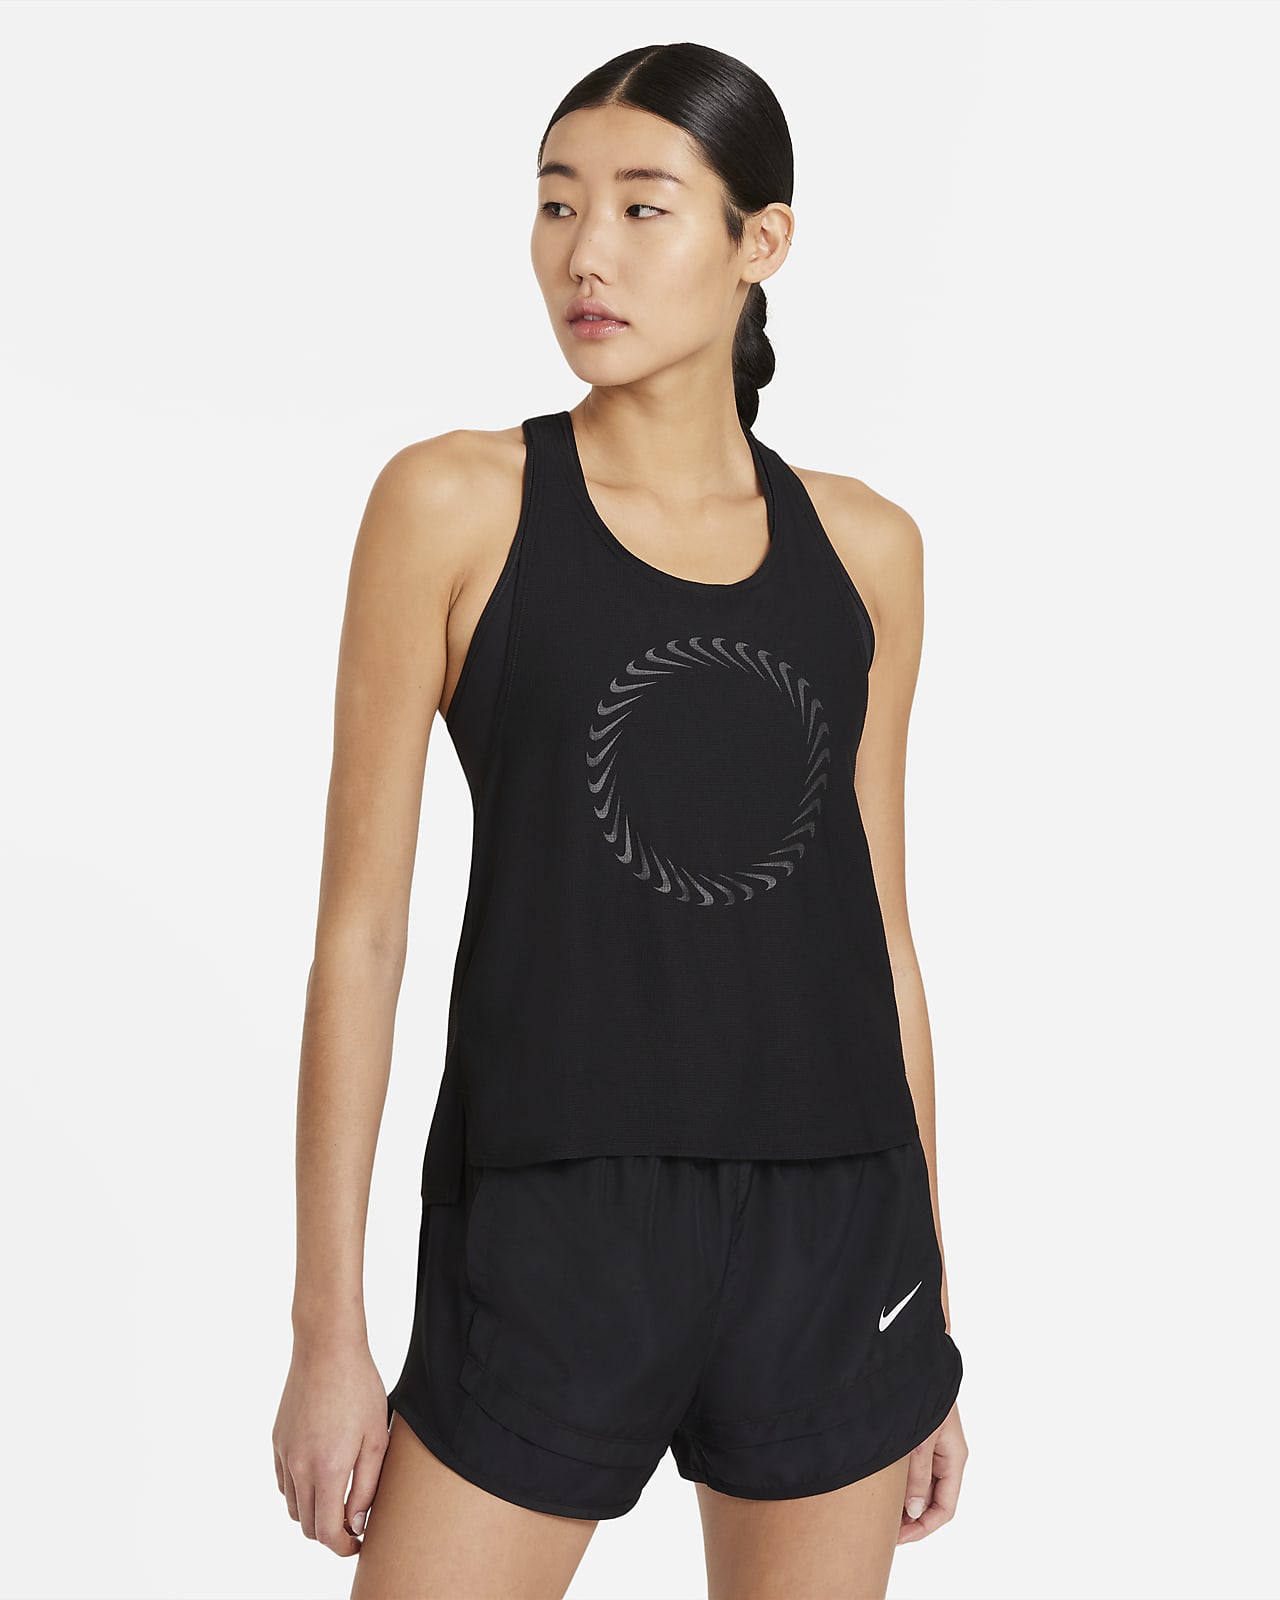 Nike Icon Clash Miler Women's Running Tank